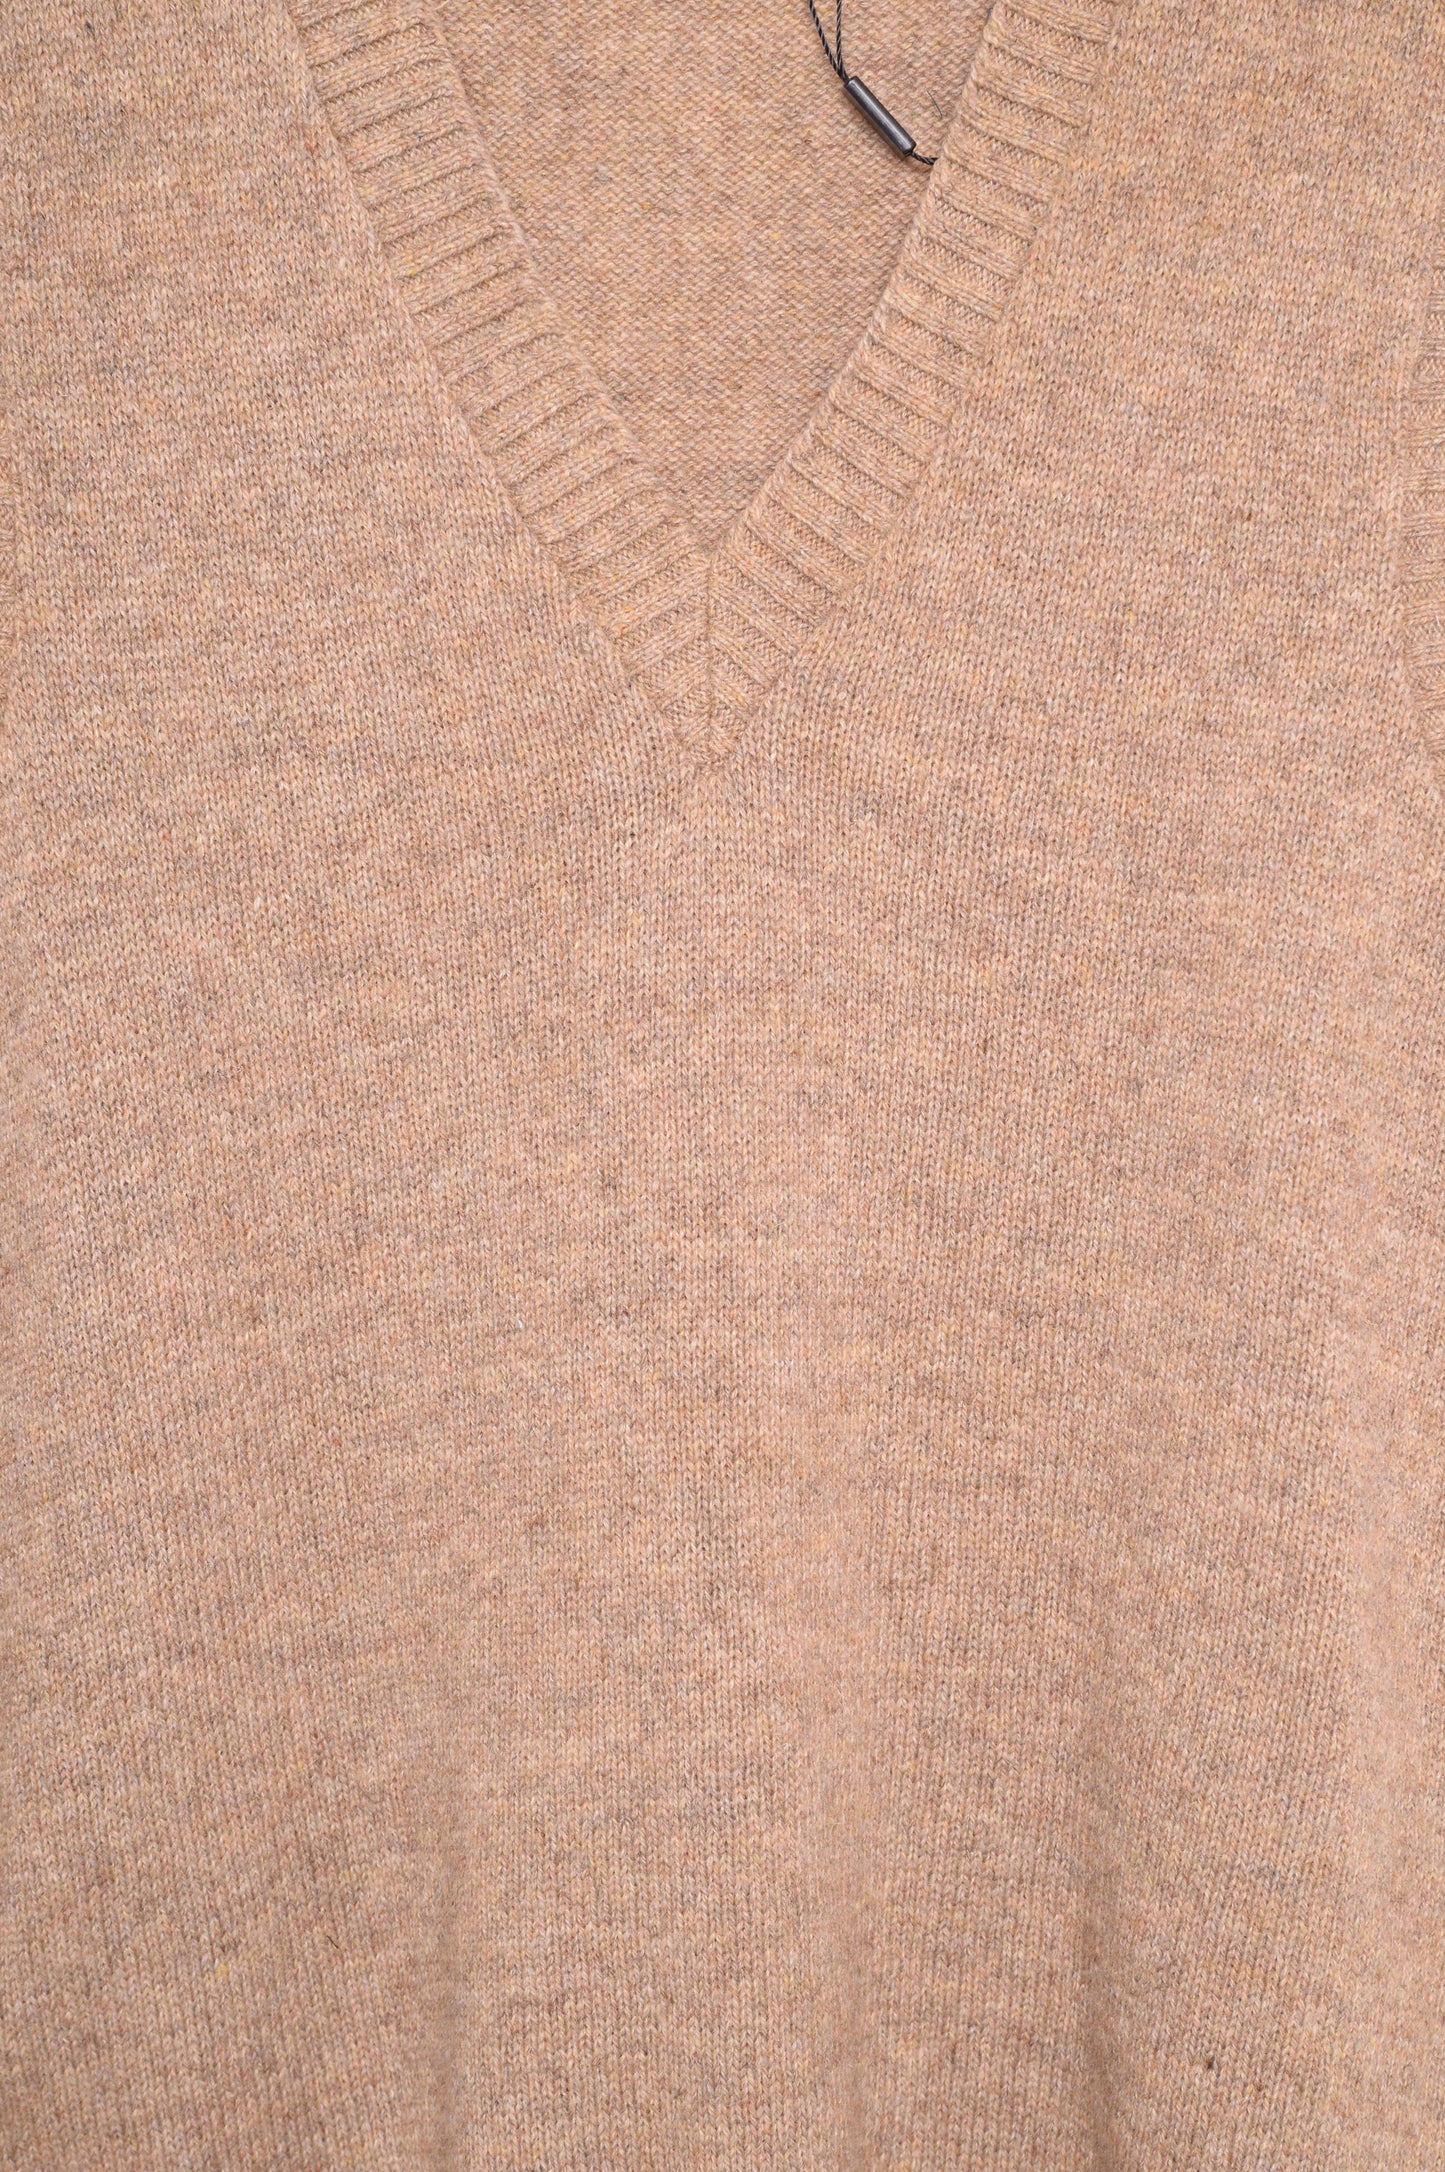 1980s Lambswool Sweater Vest